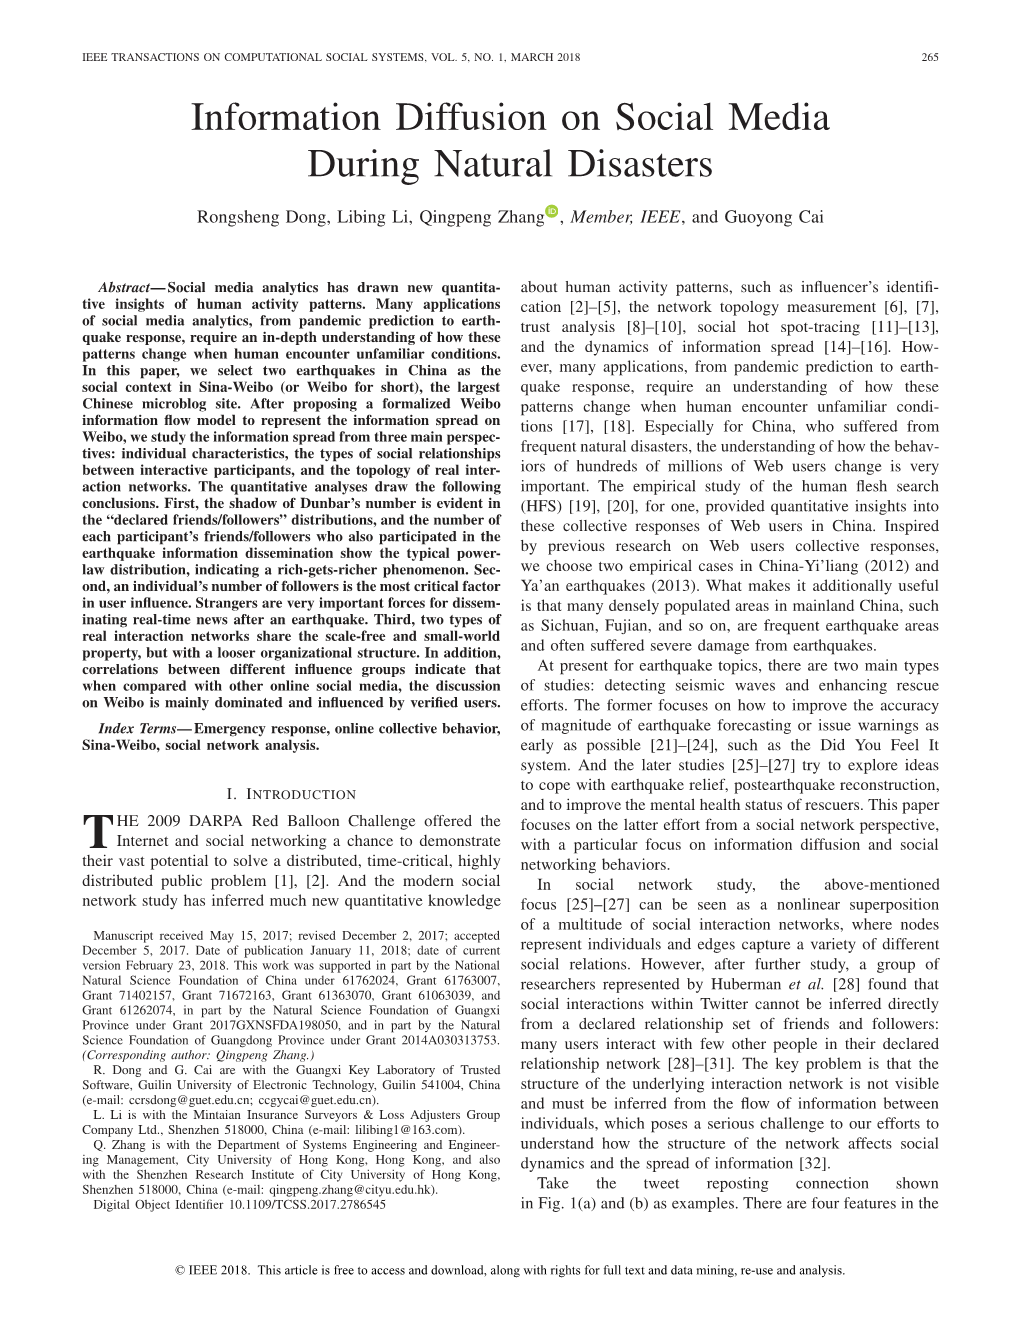 Information Diffusion on Social Media During Natural Disasters